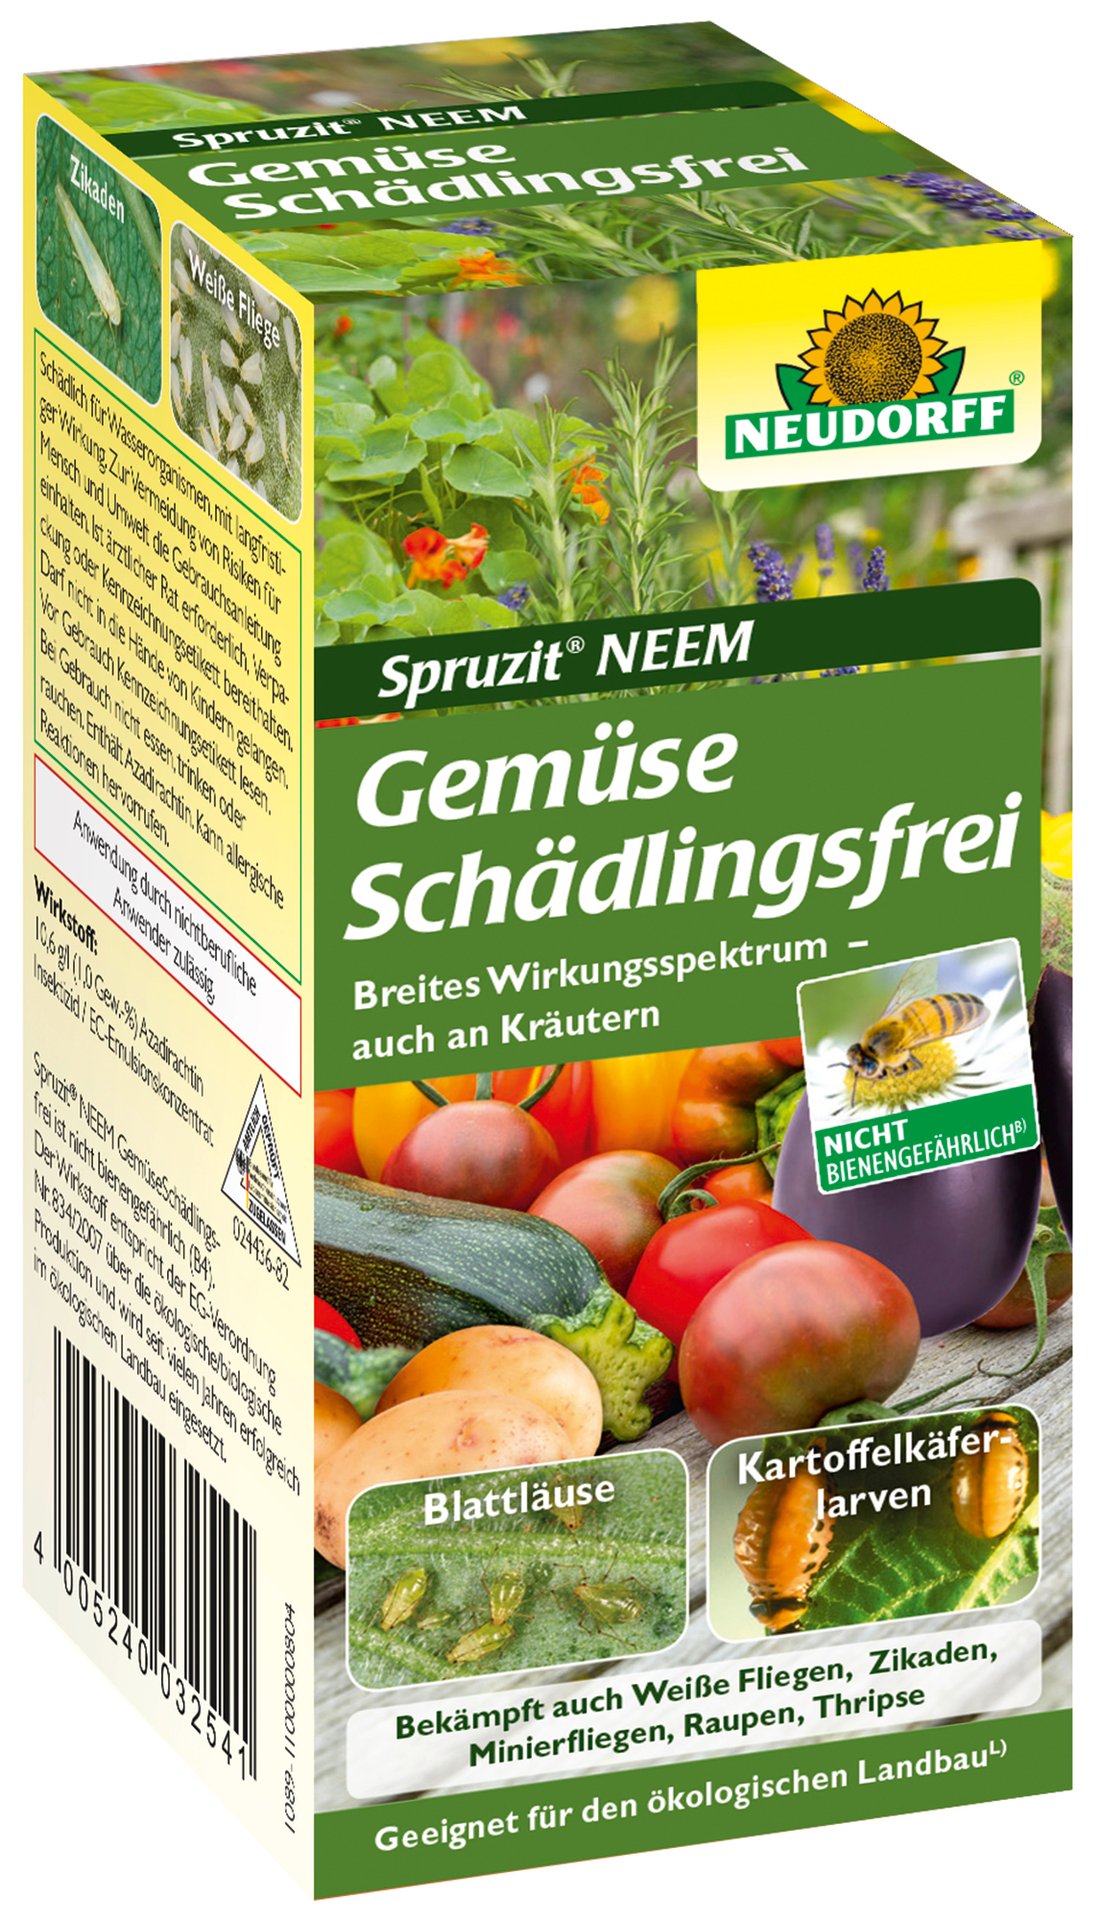 W. Neudorff GmbH KG Spruzit NEEM GemüseSchädlingsfrei